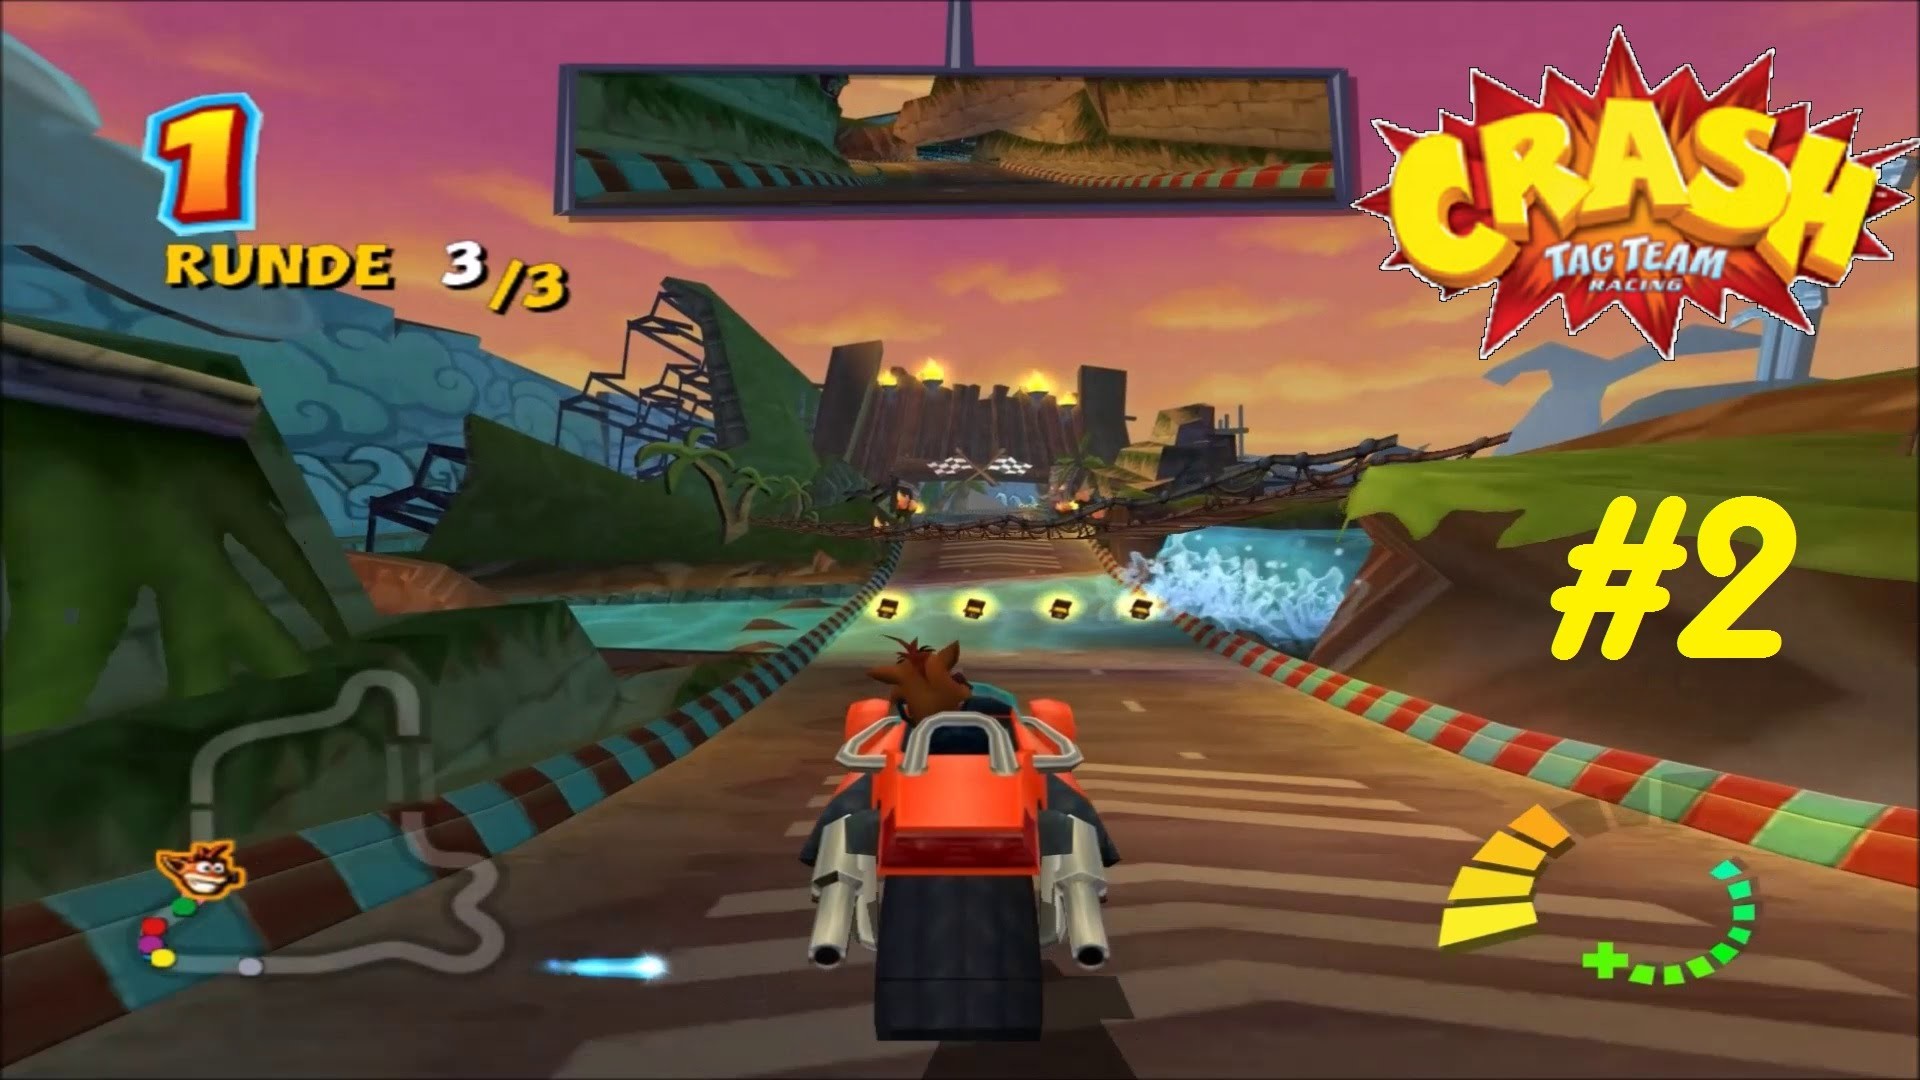 1920x1080 Crash Tag Team Racing #2 - Jetzt gehts los | Nintendo Gamecube | Full HD |  60 FPS - YouTube